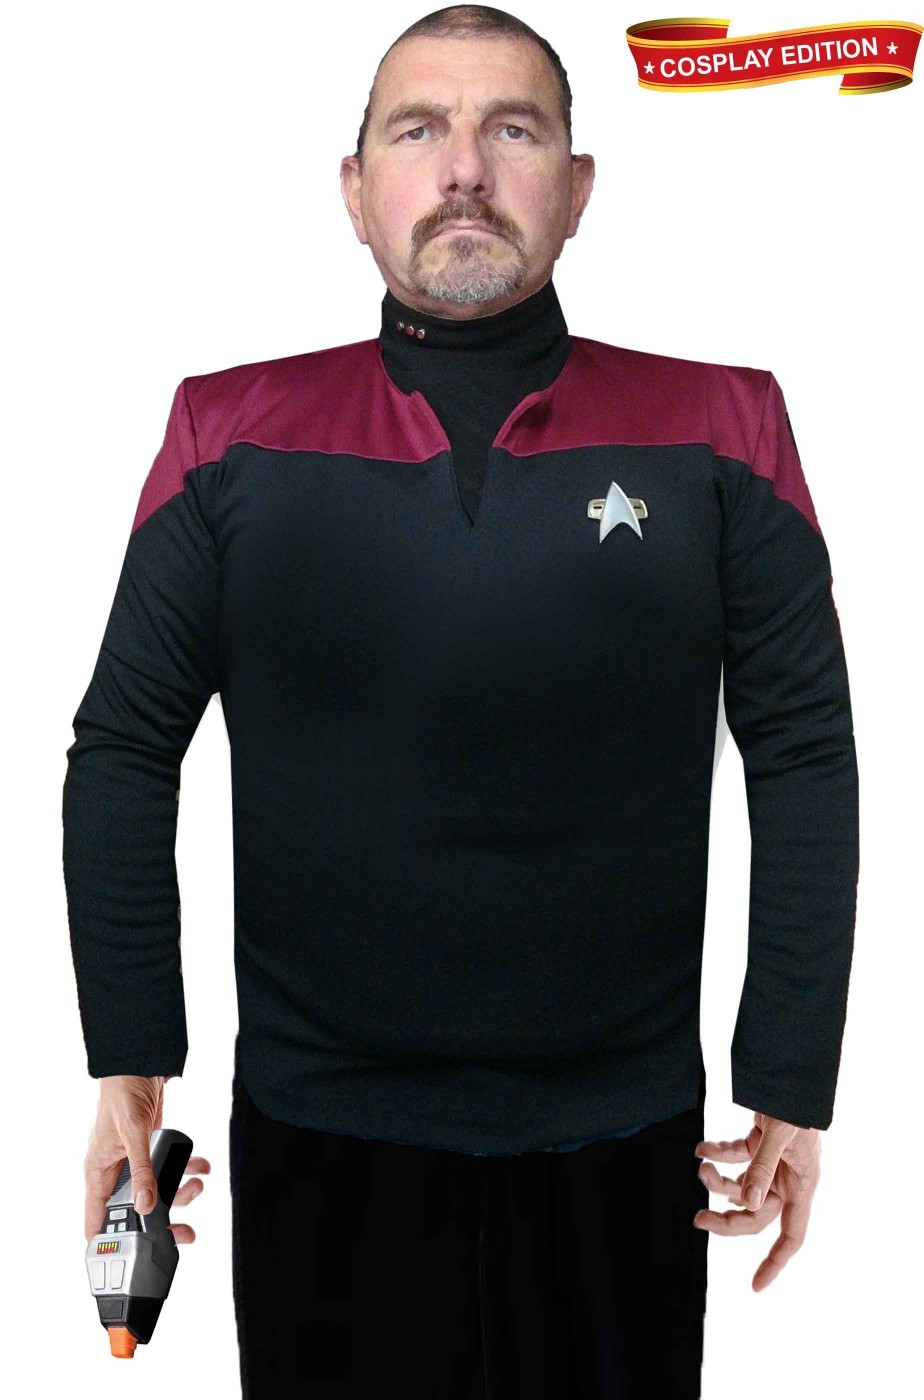 Star Trek uniforme Capitano Starfleet classe Intrepid cosplay